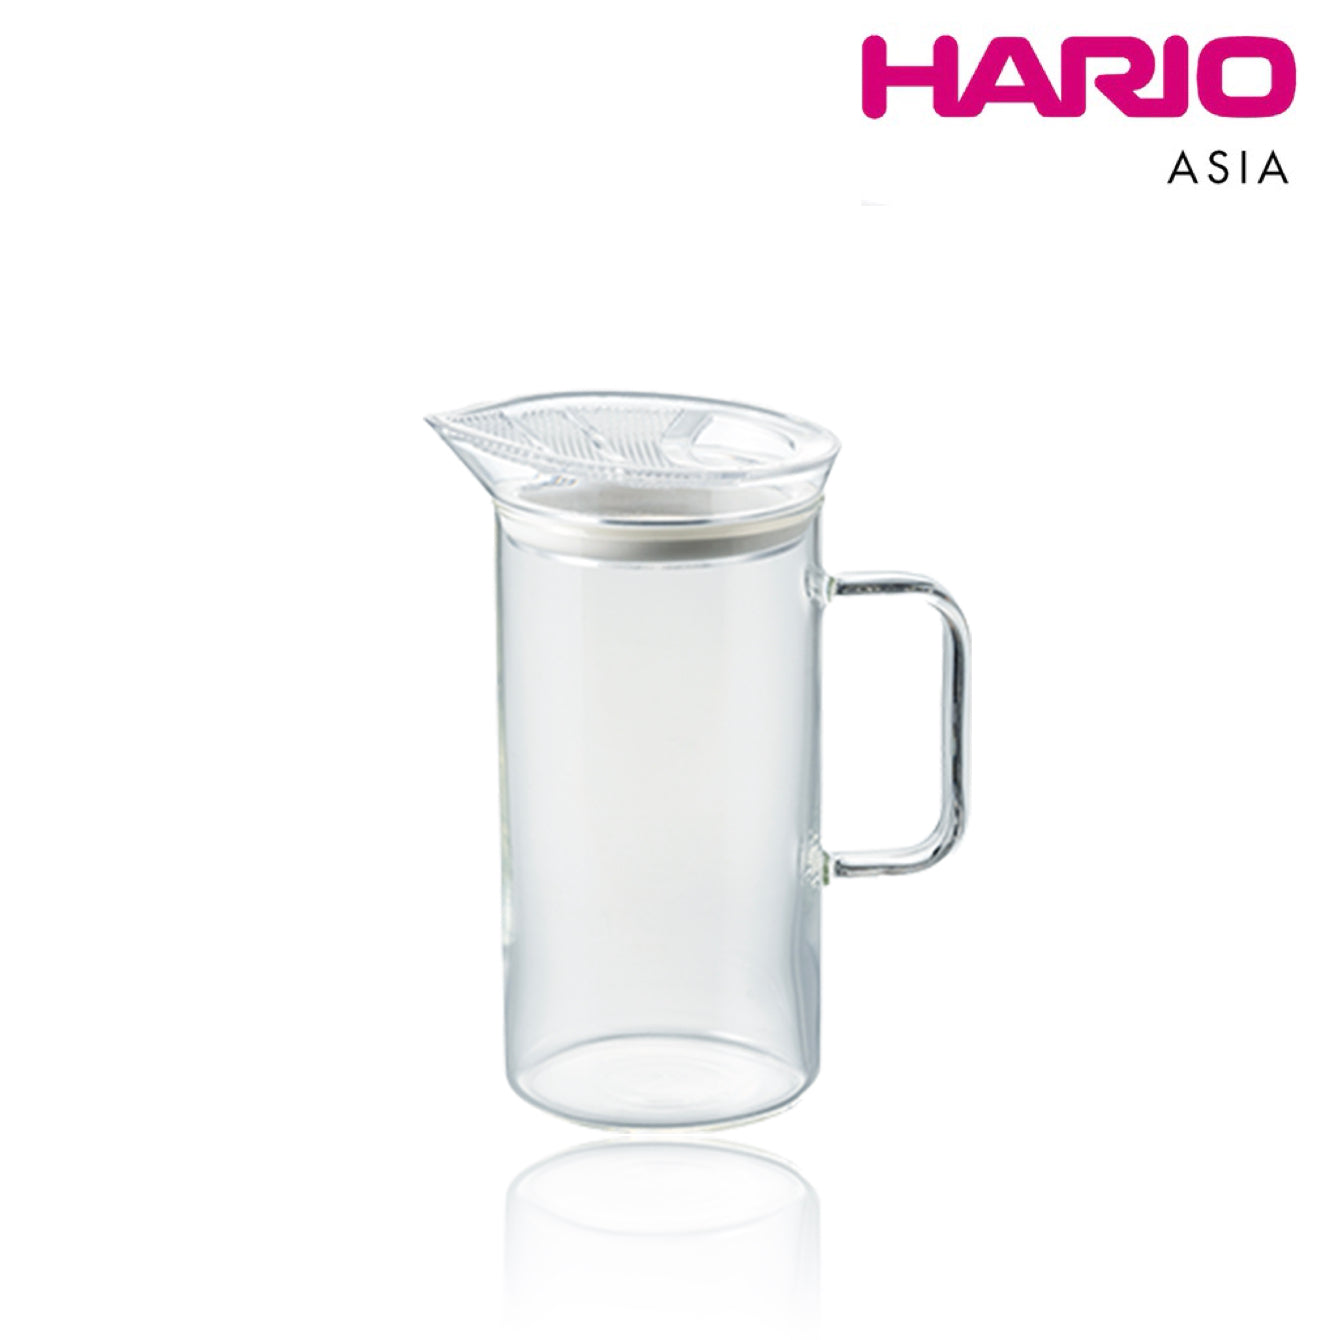 Simply Coffee and Tea Server – Hario USA